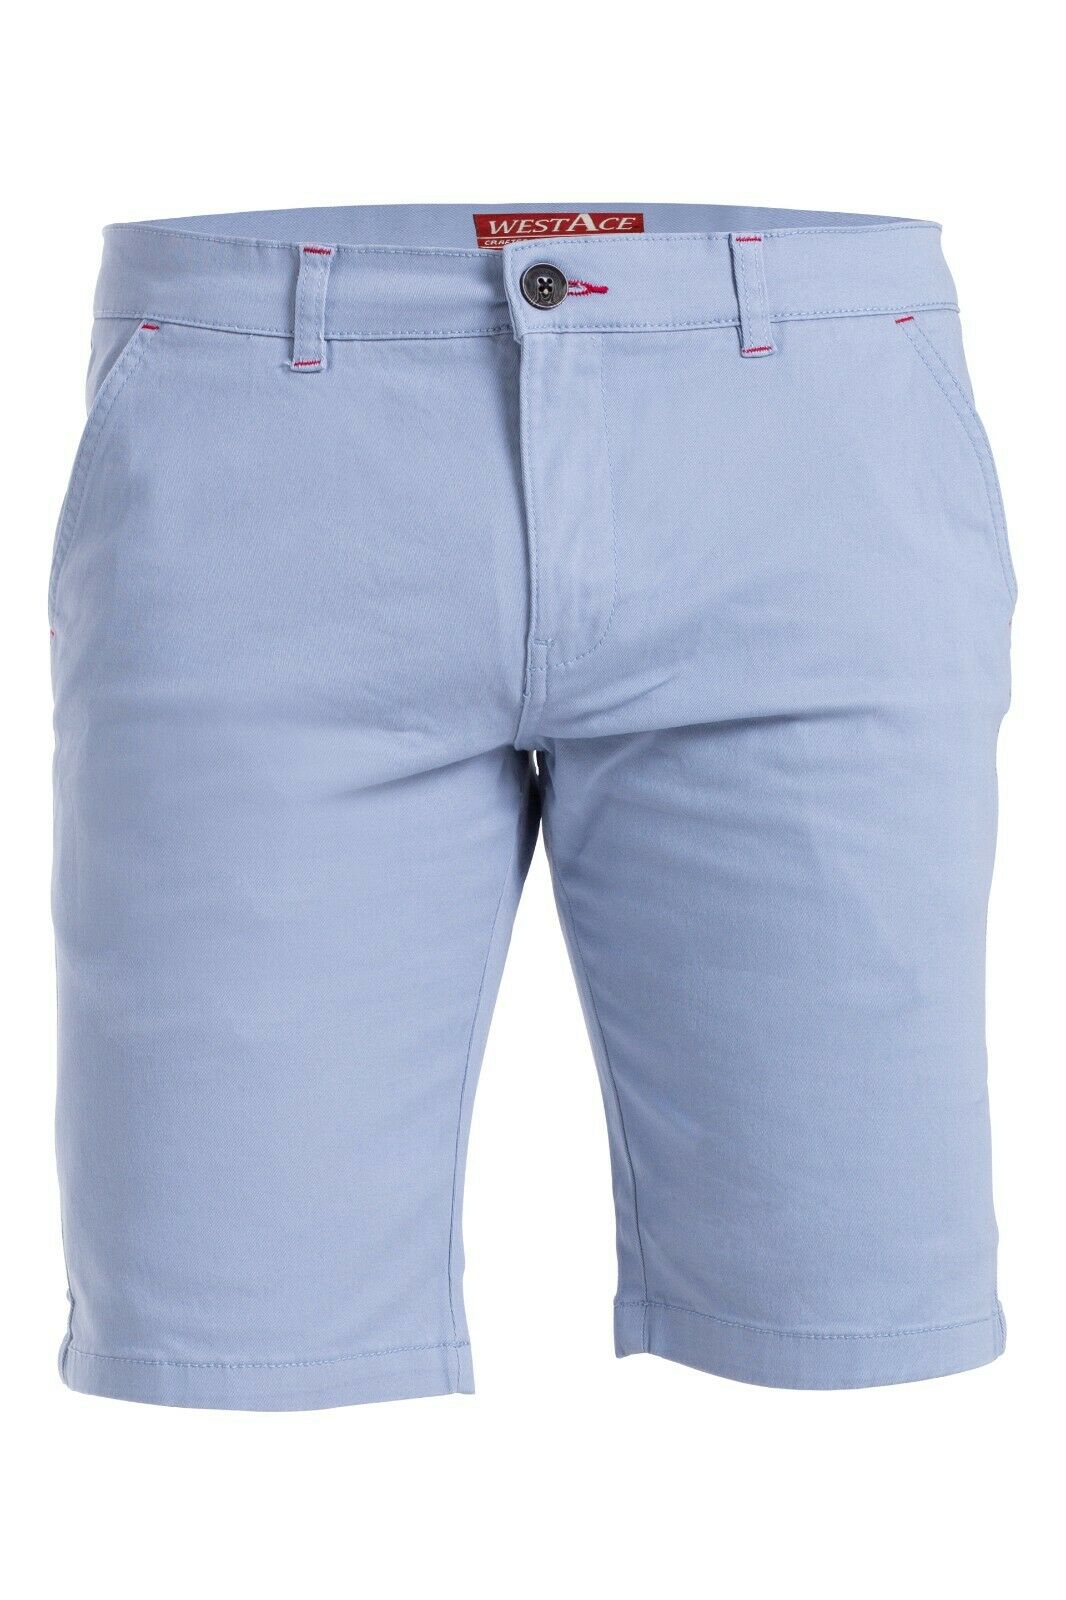 Mens Cotton Cargo Combat Half Pants Trousers Beach Shorts Khakis Pocket |  eBay